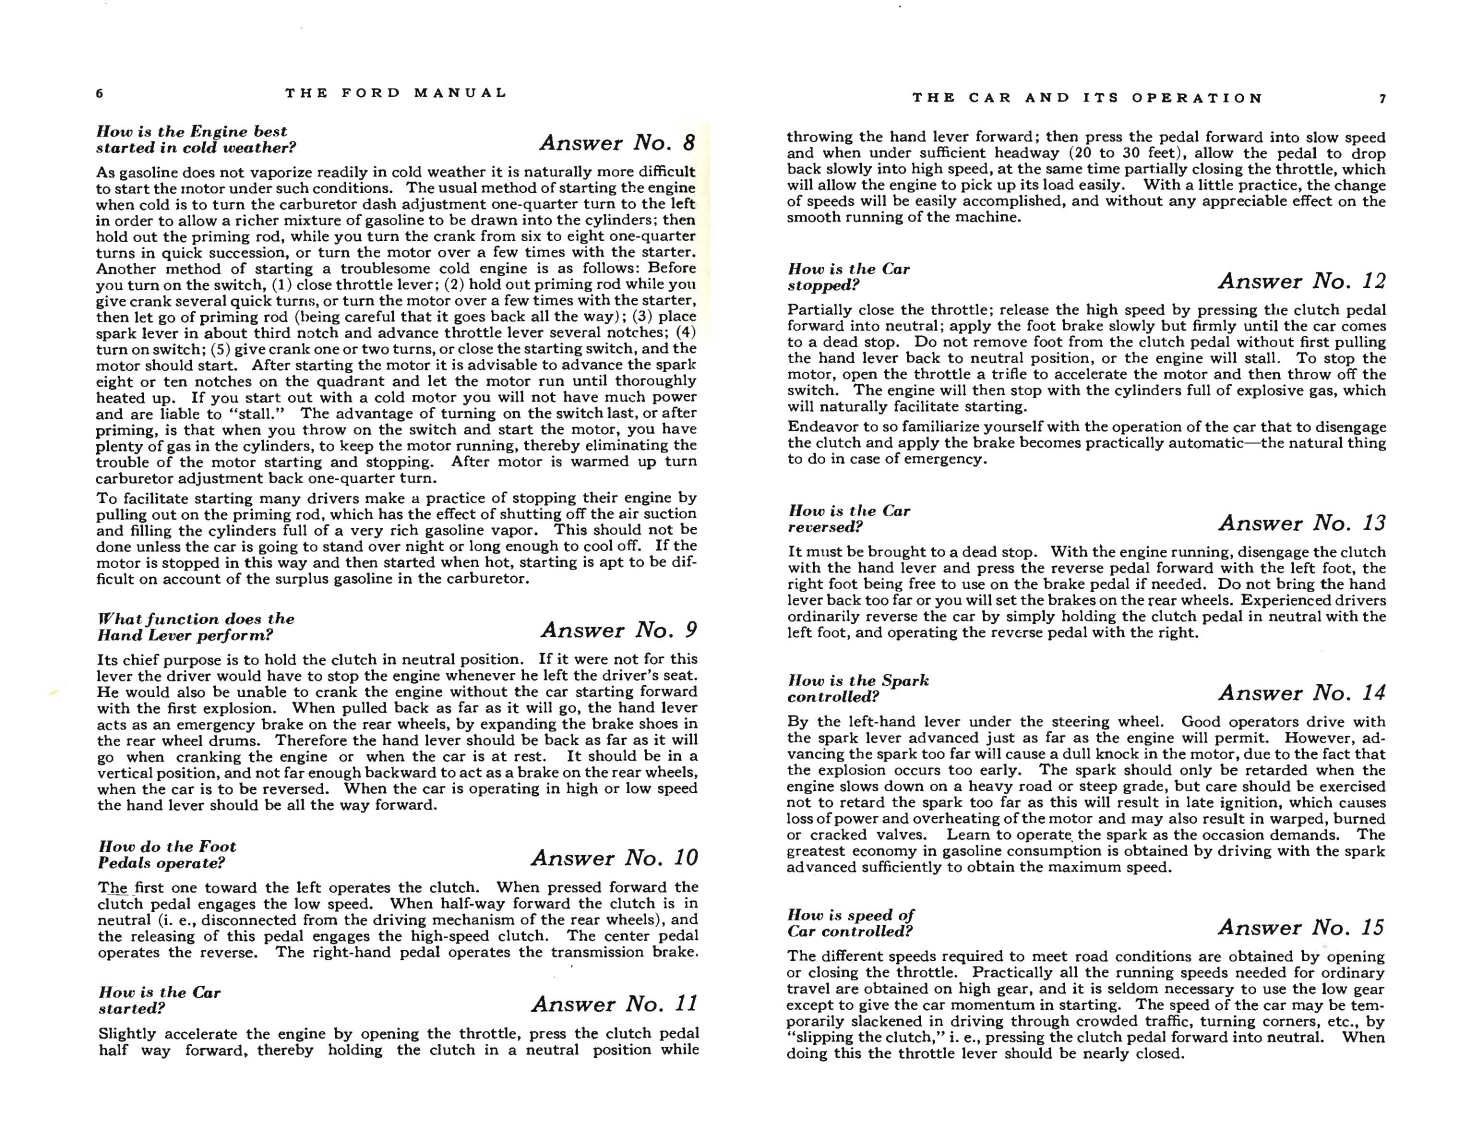 n_1924 Ford Owners Manual-06-07.jpg